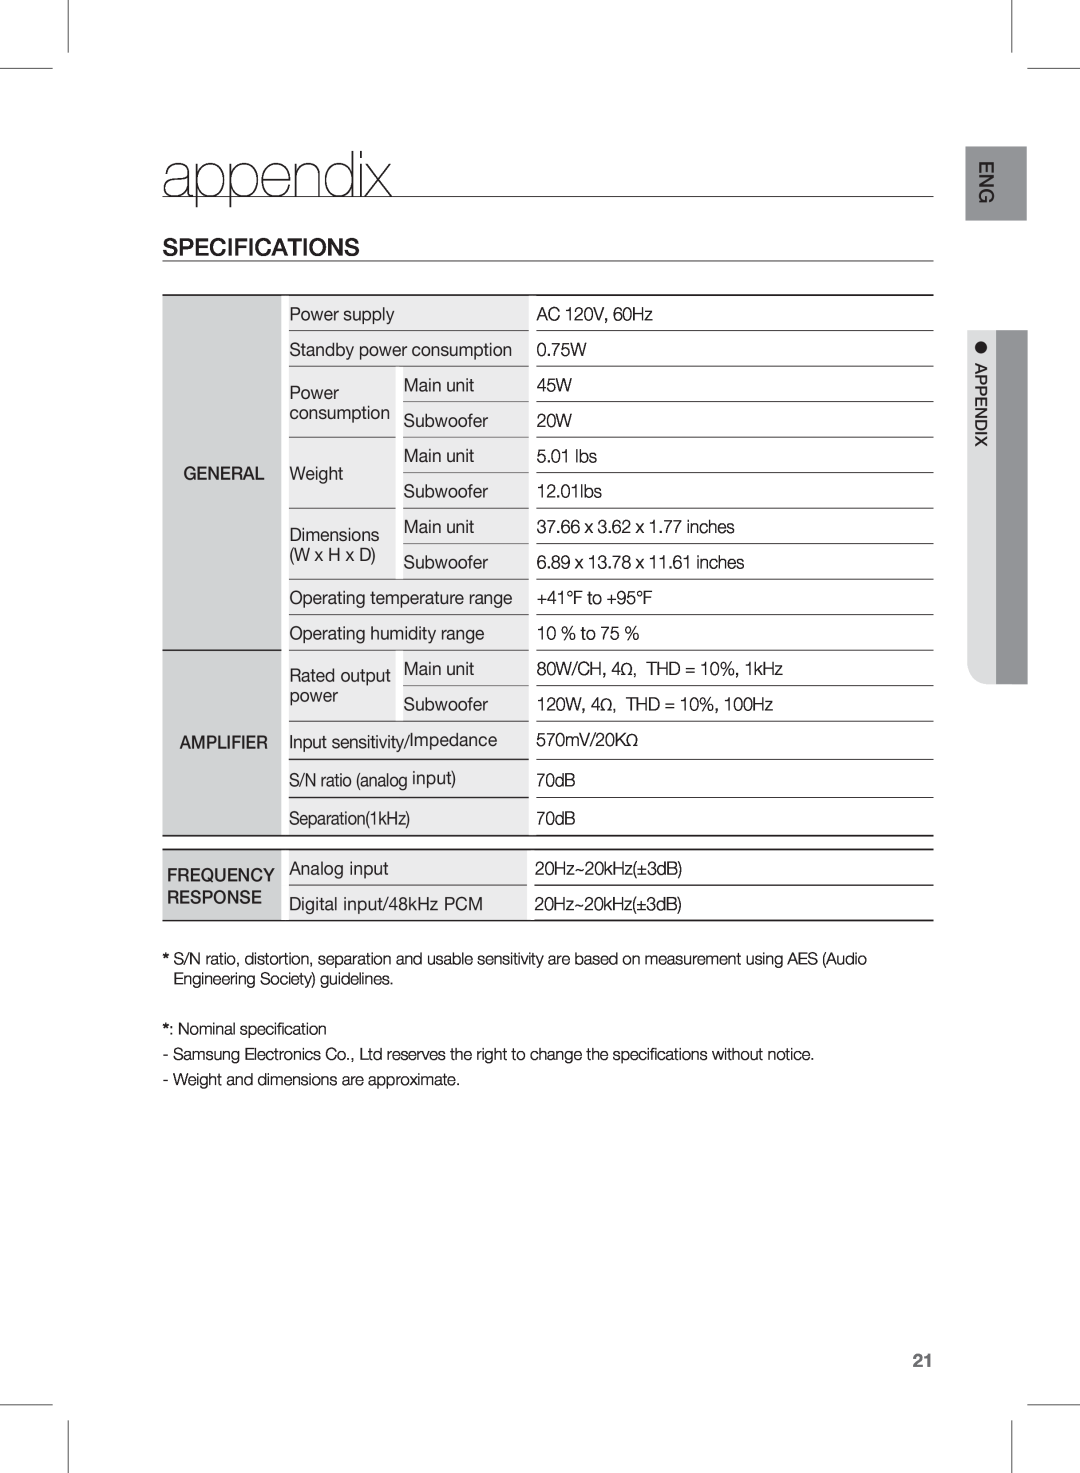 Siemens HW-D450 user manual appendix, Specifications 